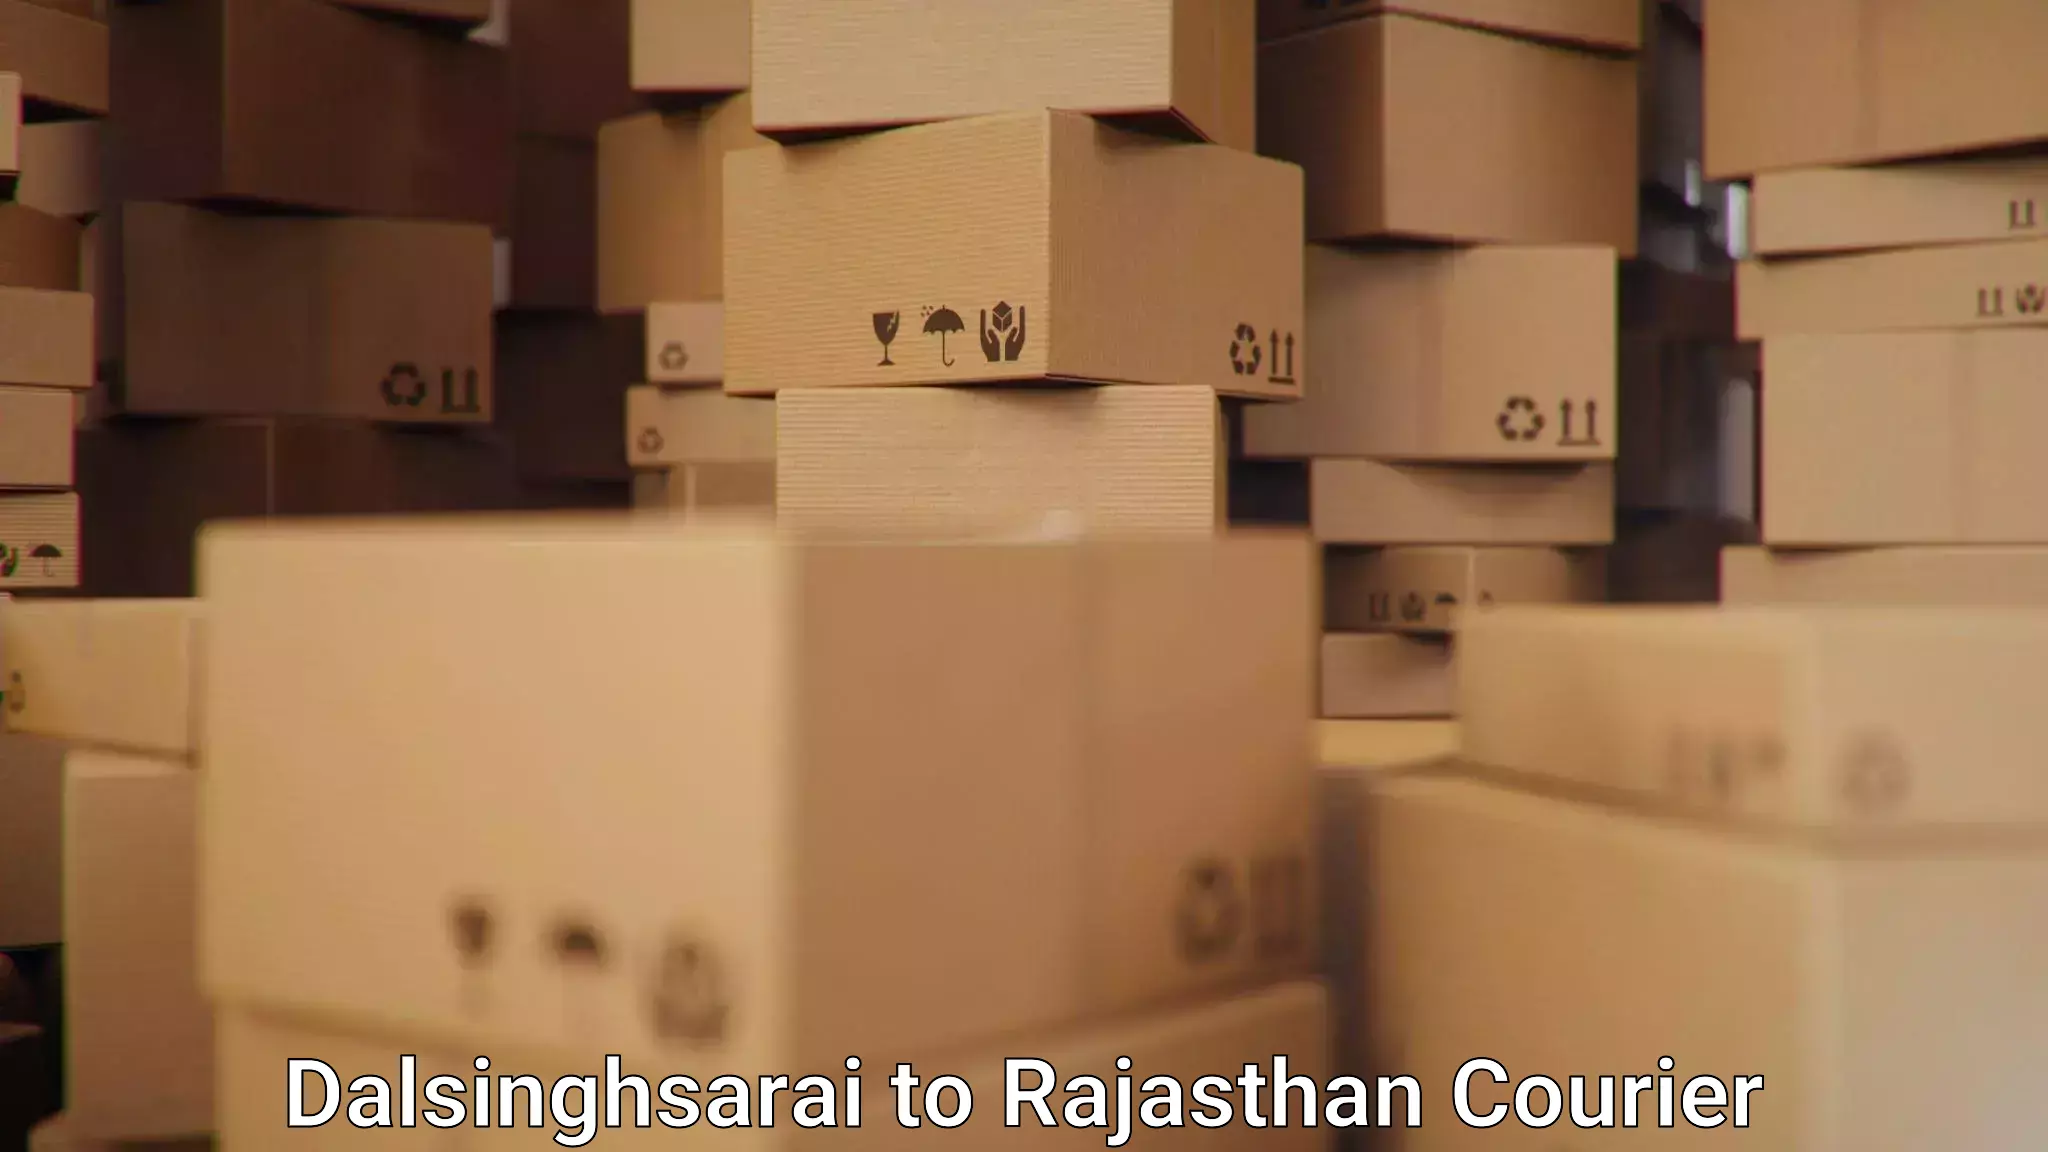 Courier service innovation Dalsinghsarai to IIT Jodhpur